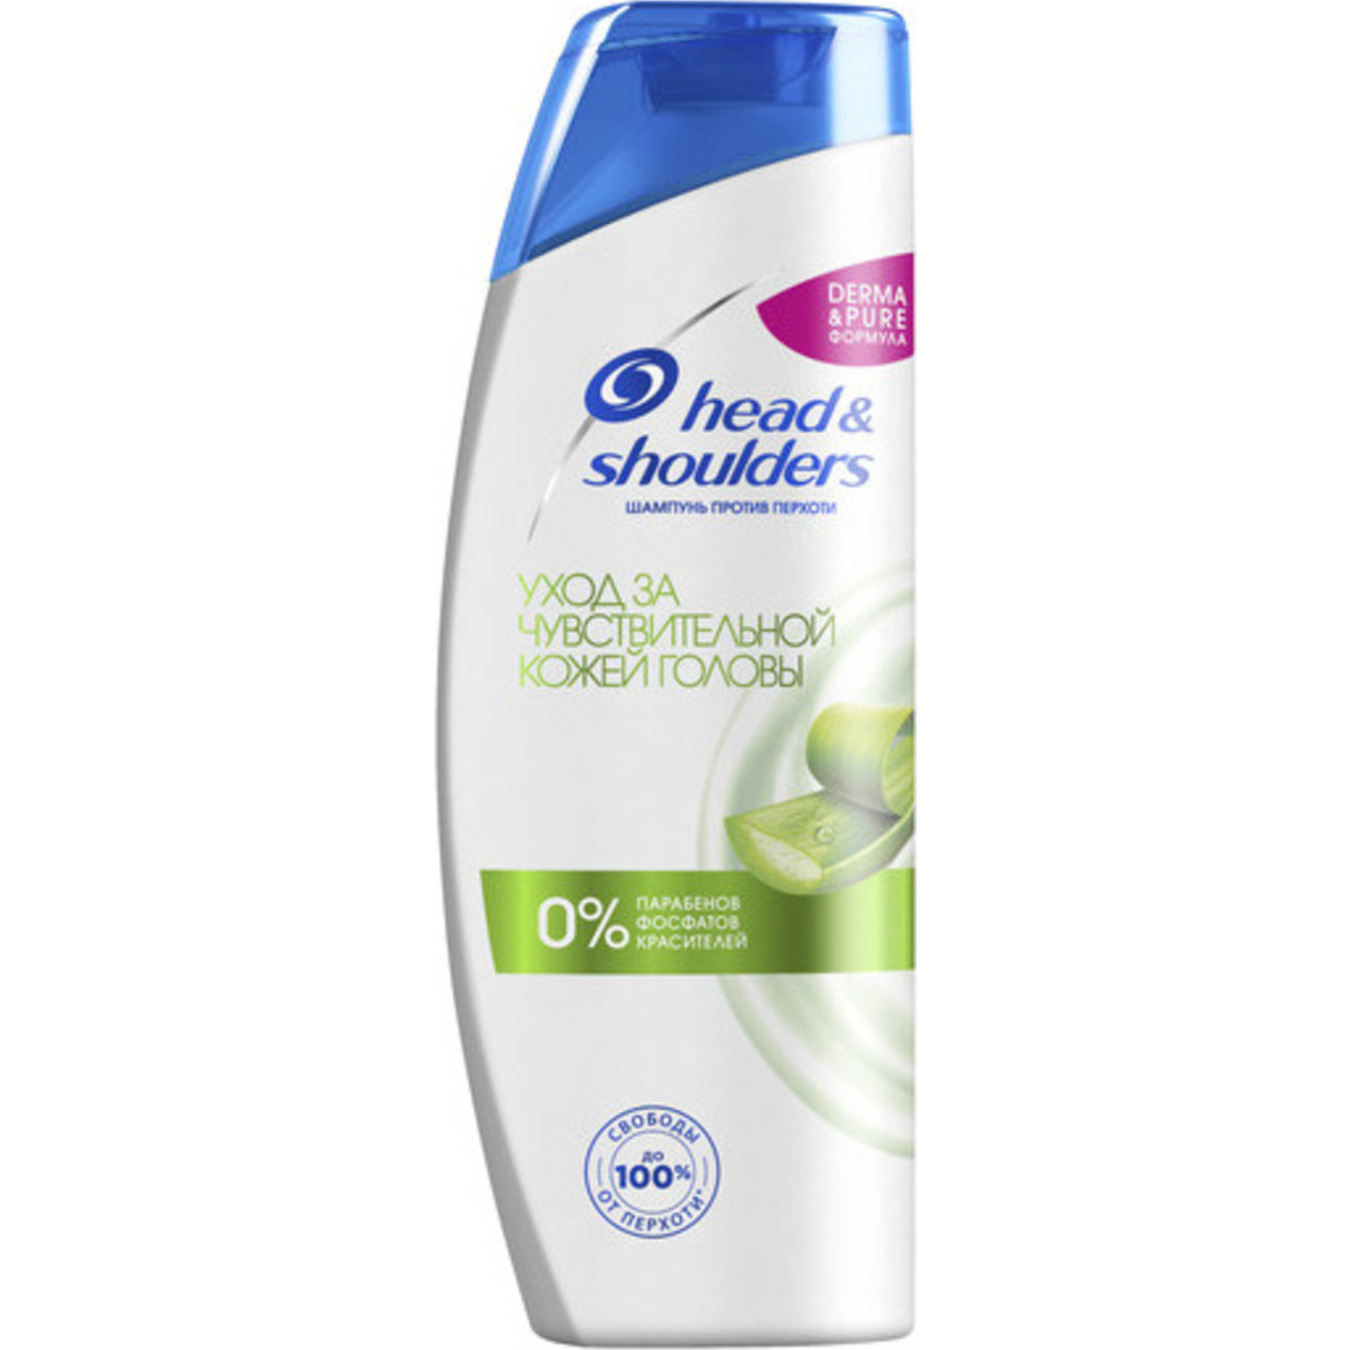 Head & Shoulders Shampoo for Sensitive Scalp 400ml